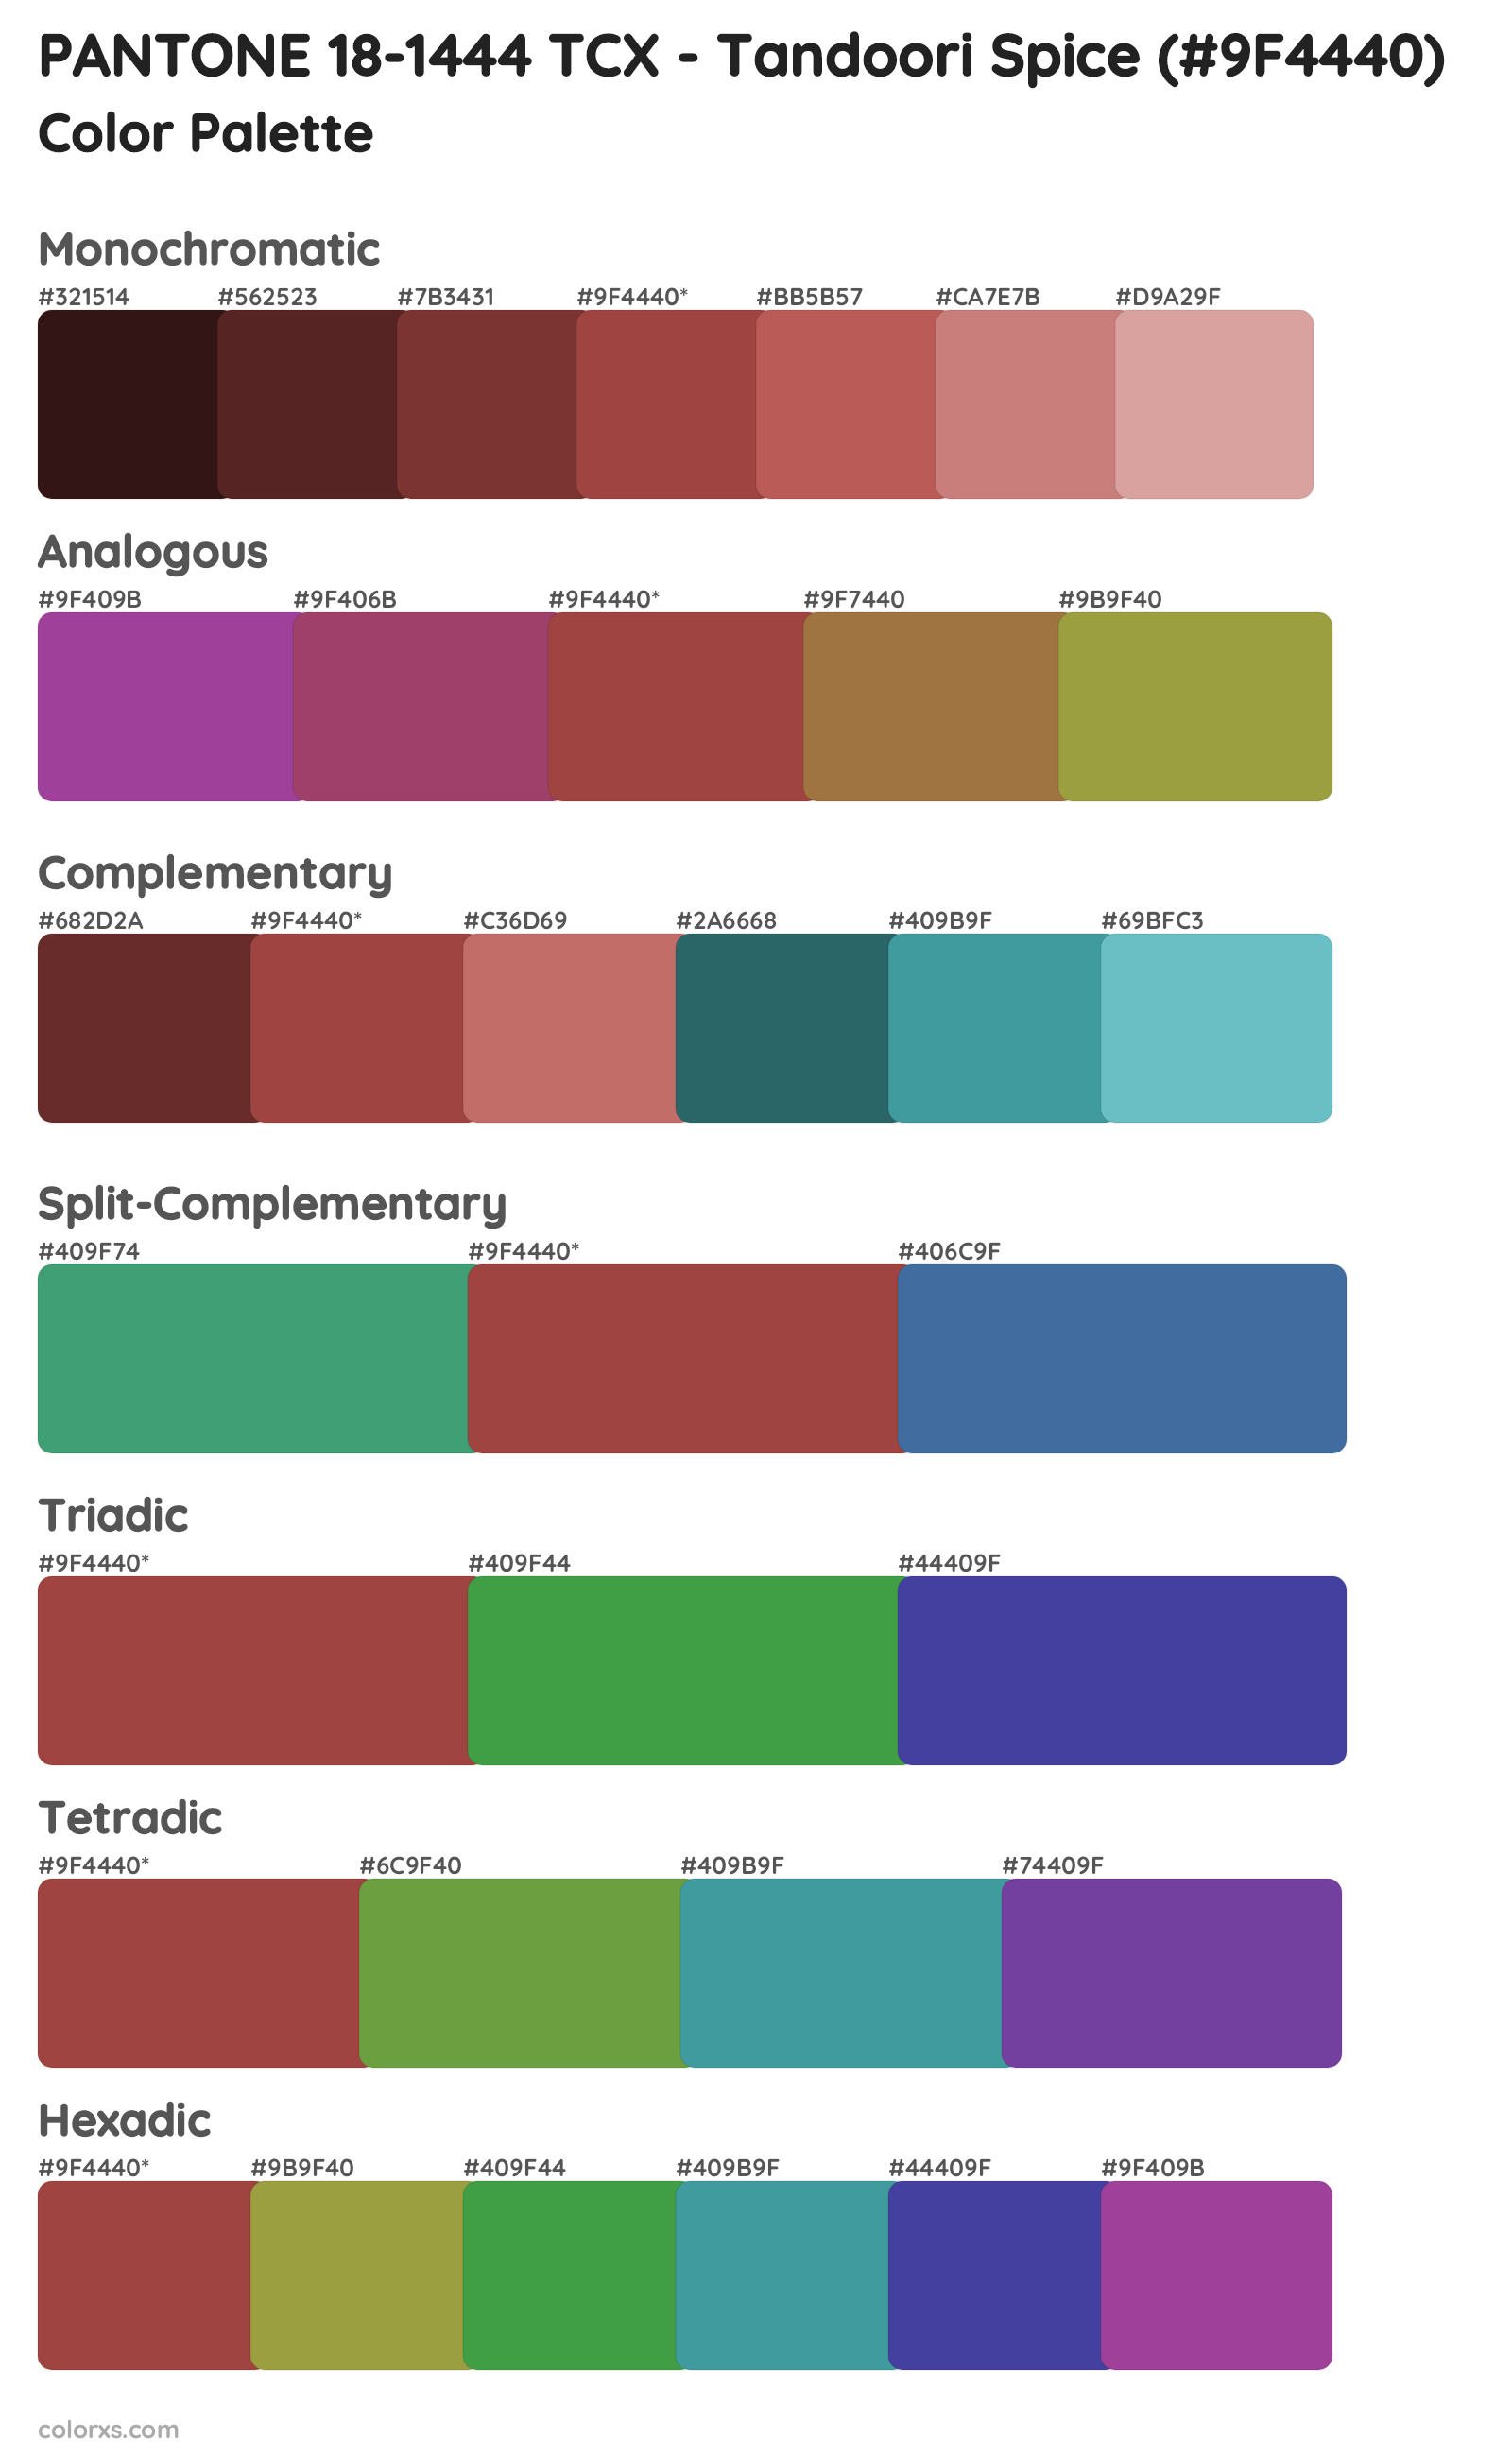 PANTONE 18-1444 TCX - Tandoori Spice Color Scheme Palettes